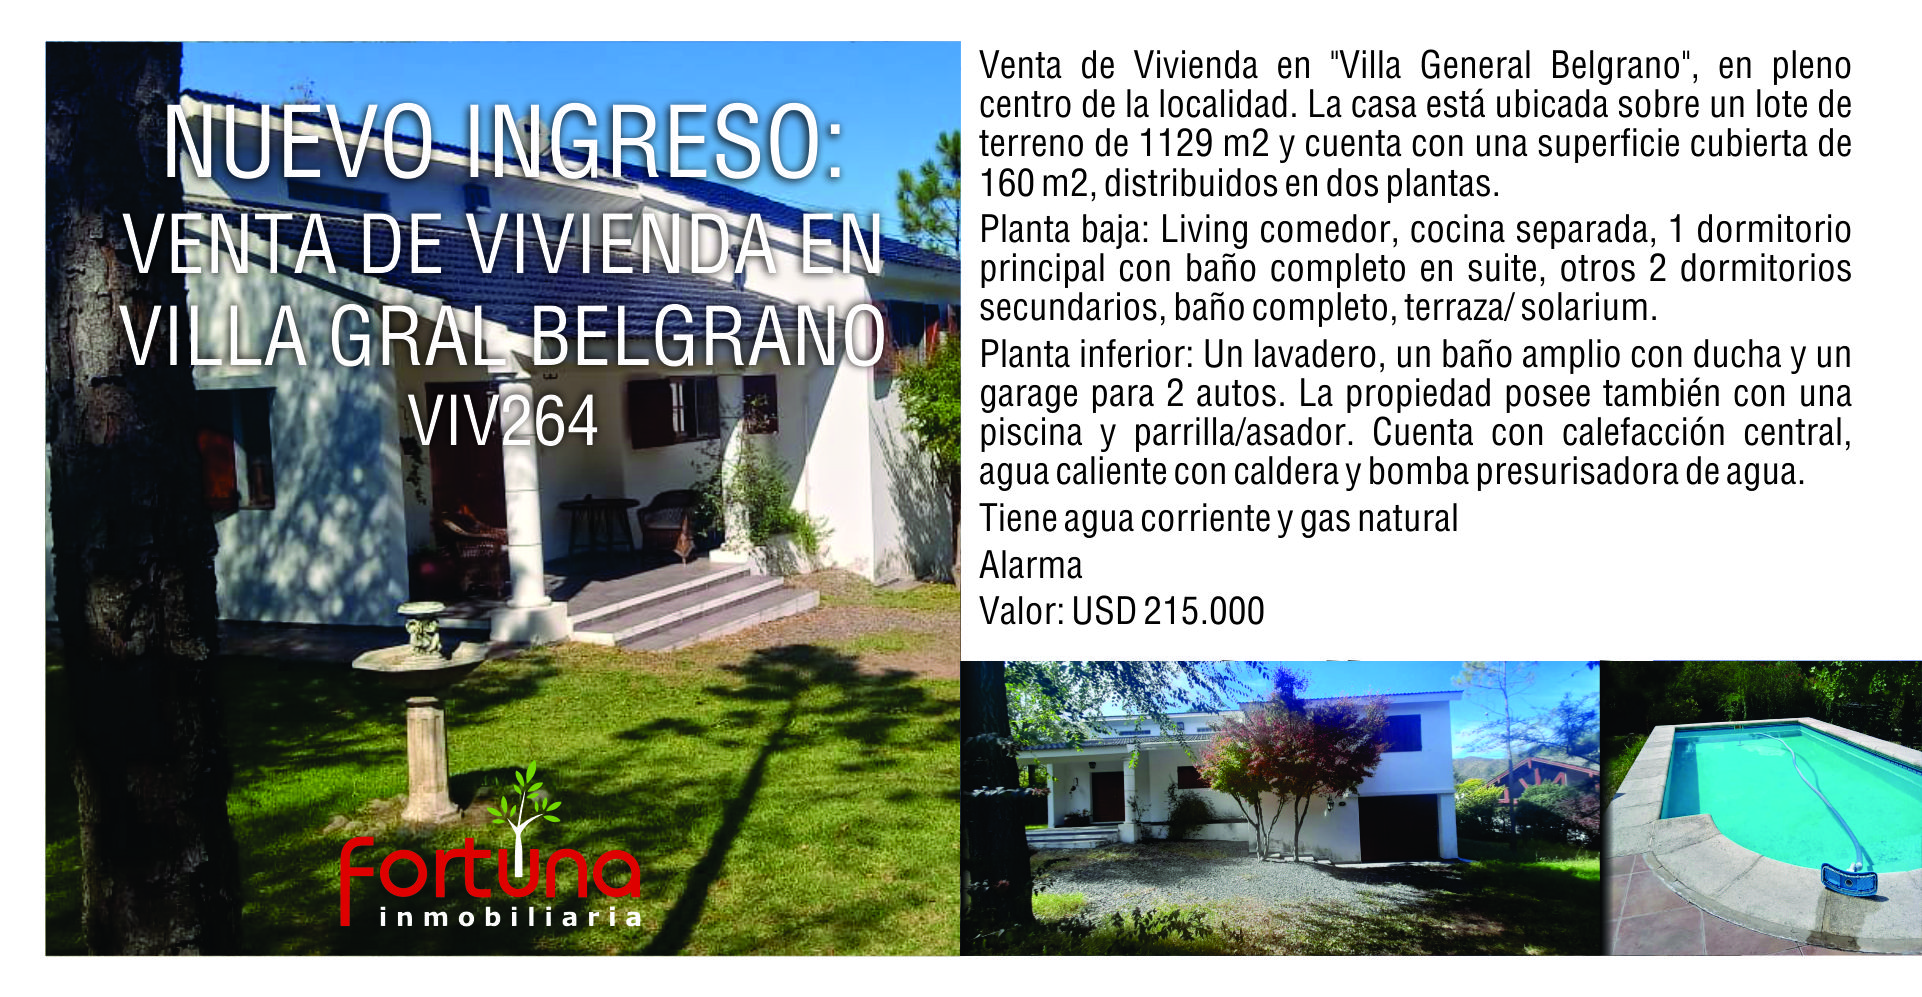 VIV264-VentaDeVivienda-CasaEnVenta-VillaGeneralBelgrano-FortunaInmobiliaria